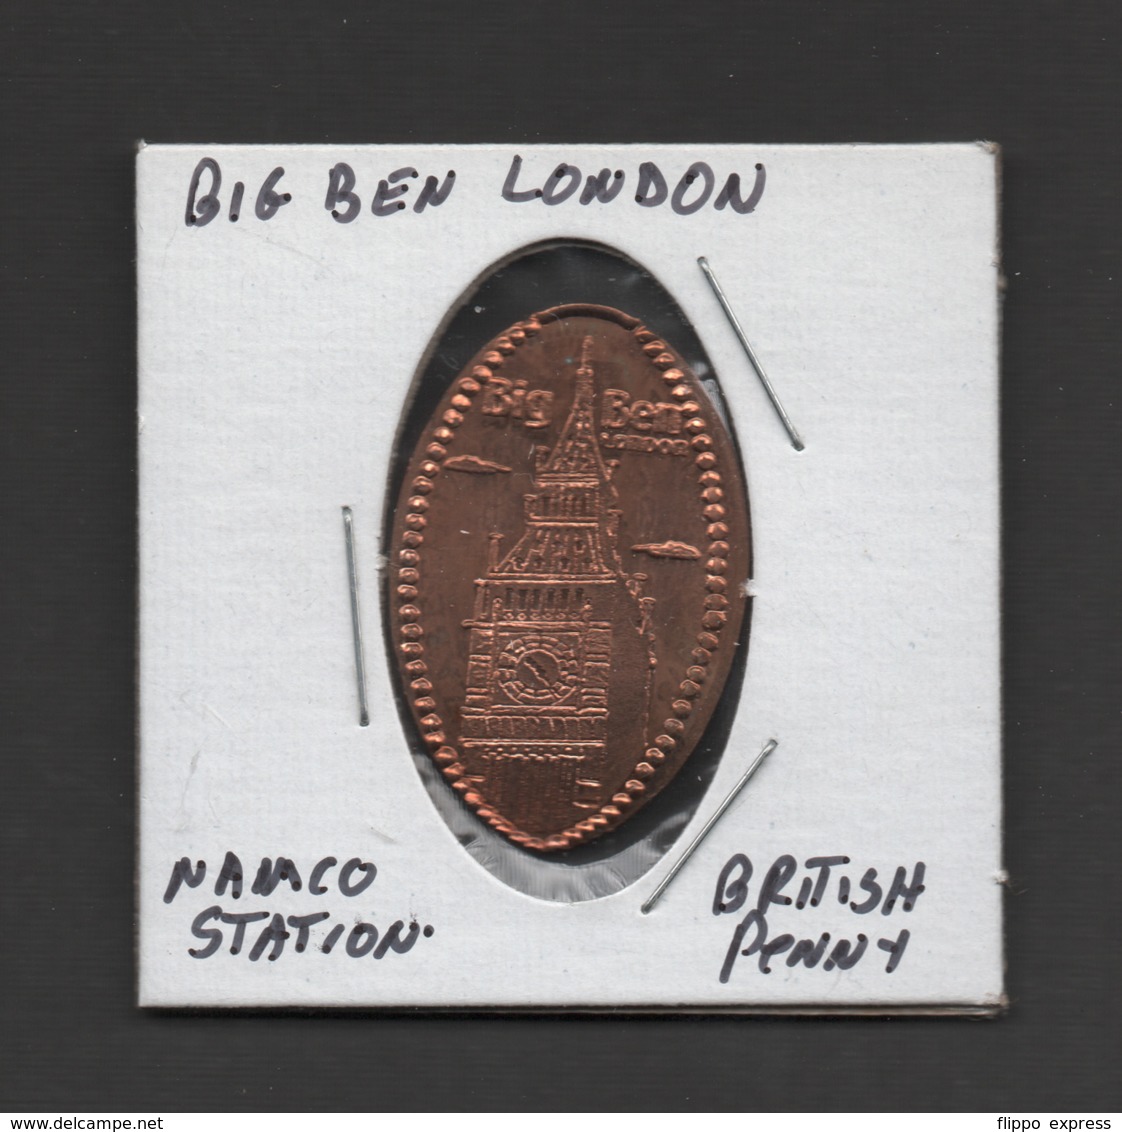 Pressed Penny, Elongated Coin, Big Ben, London, England - Souvenirmunten (elongated Coins)